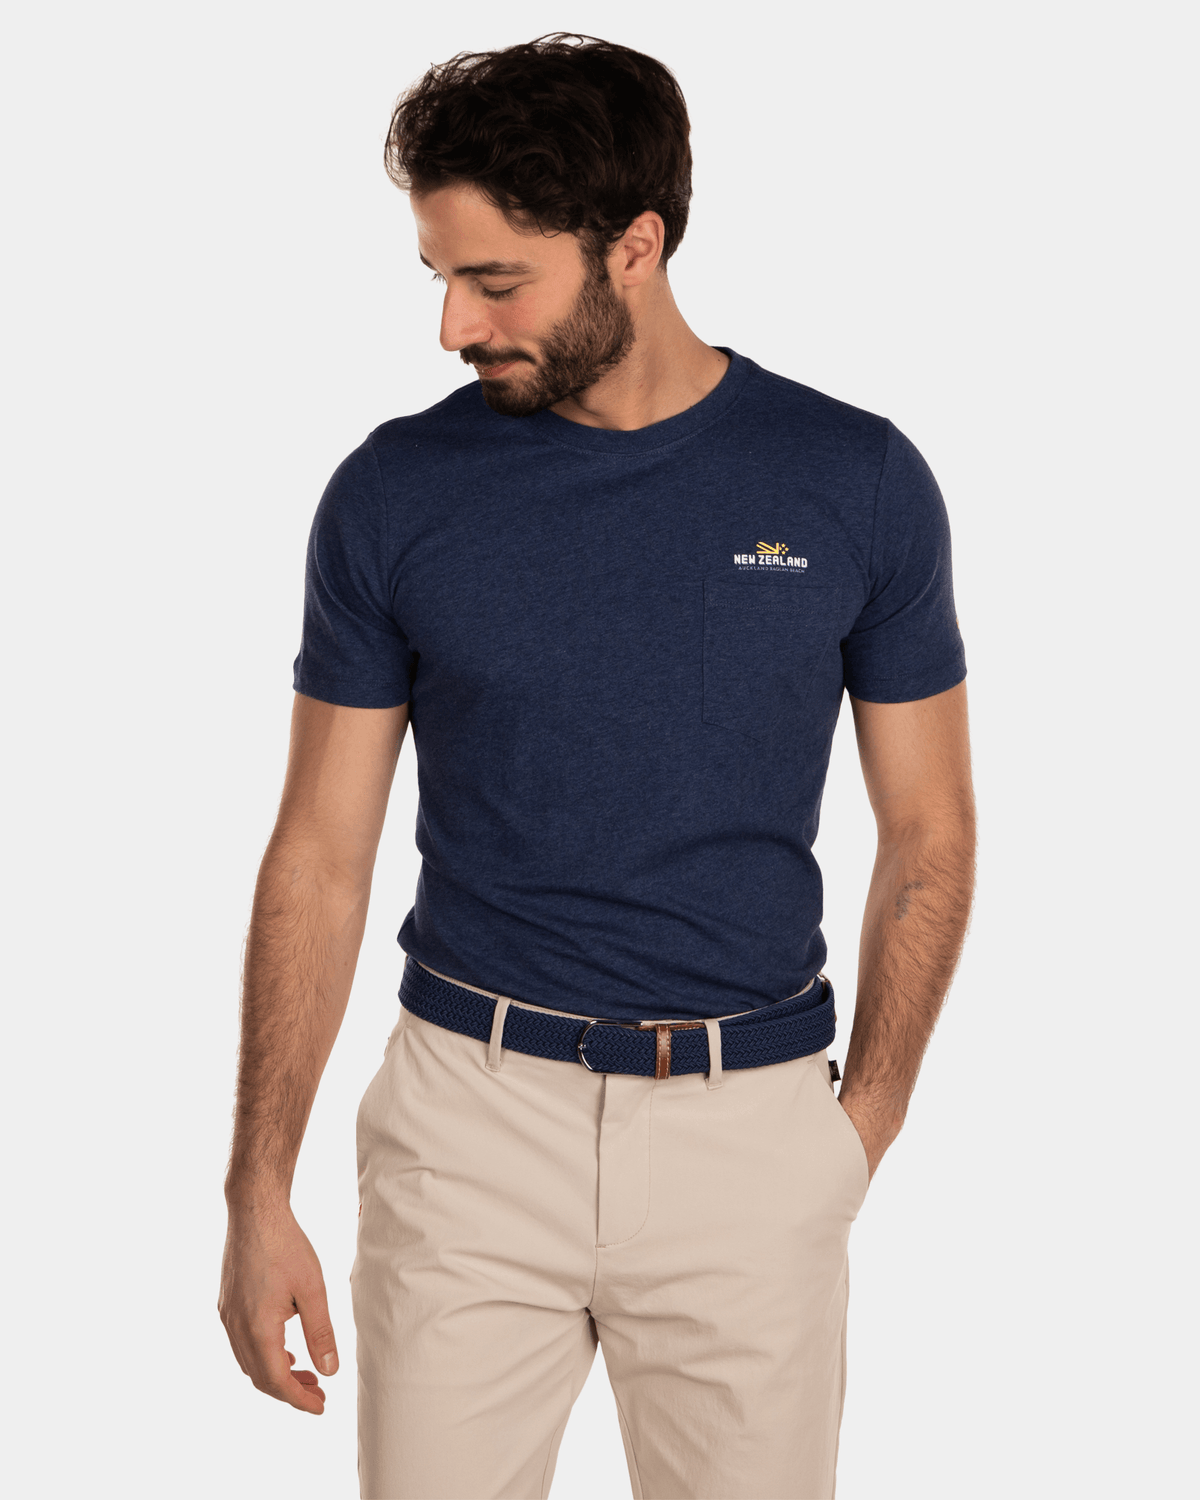 Cotton t-shirt with print - Key Navy